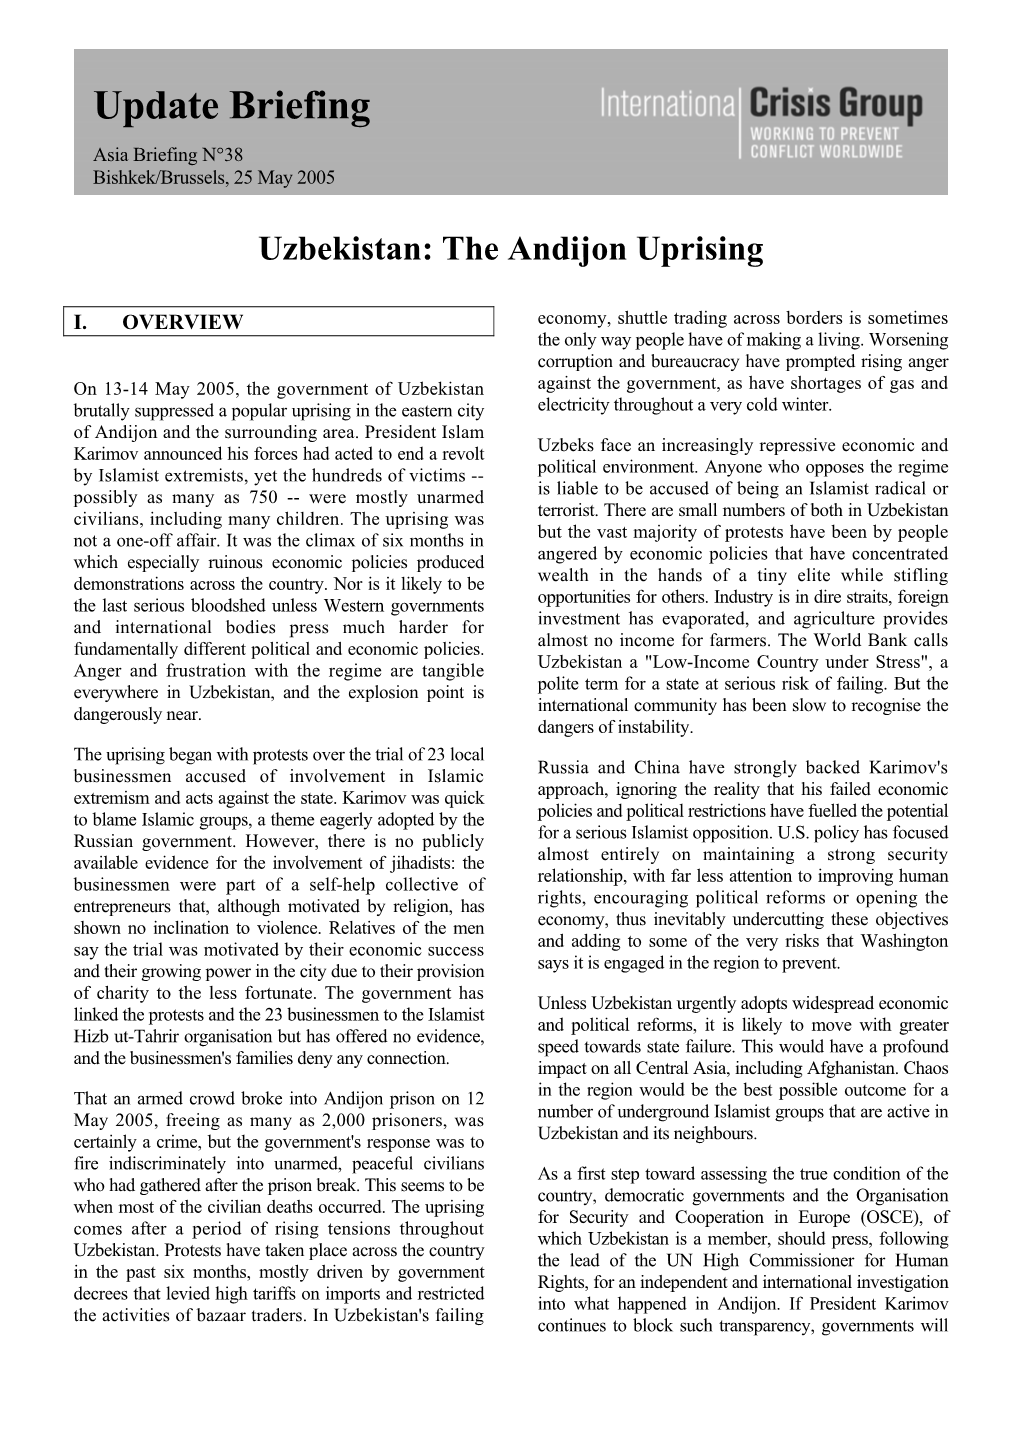 Asia Briefing, Nr. 38: Uzbekistan